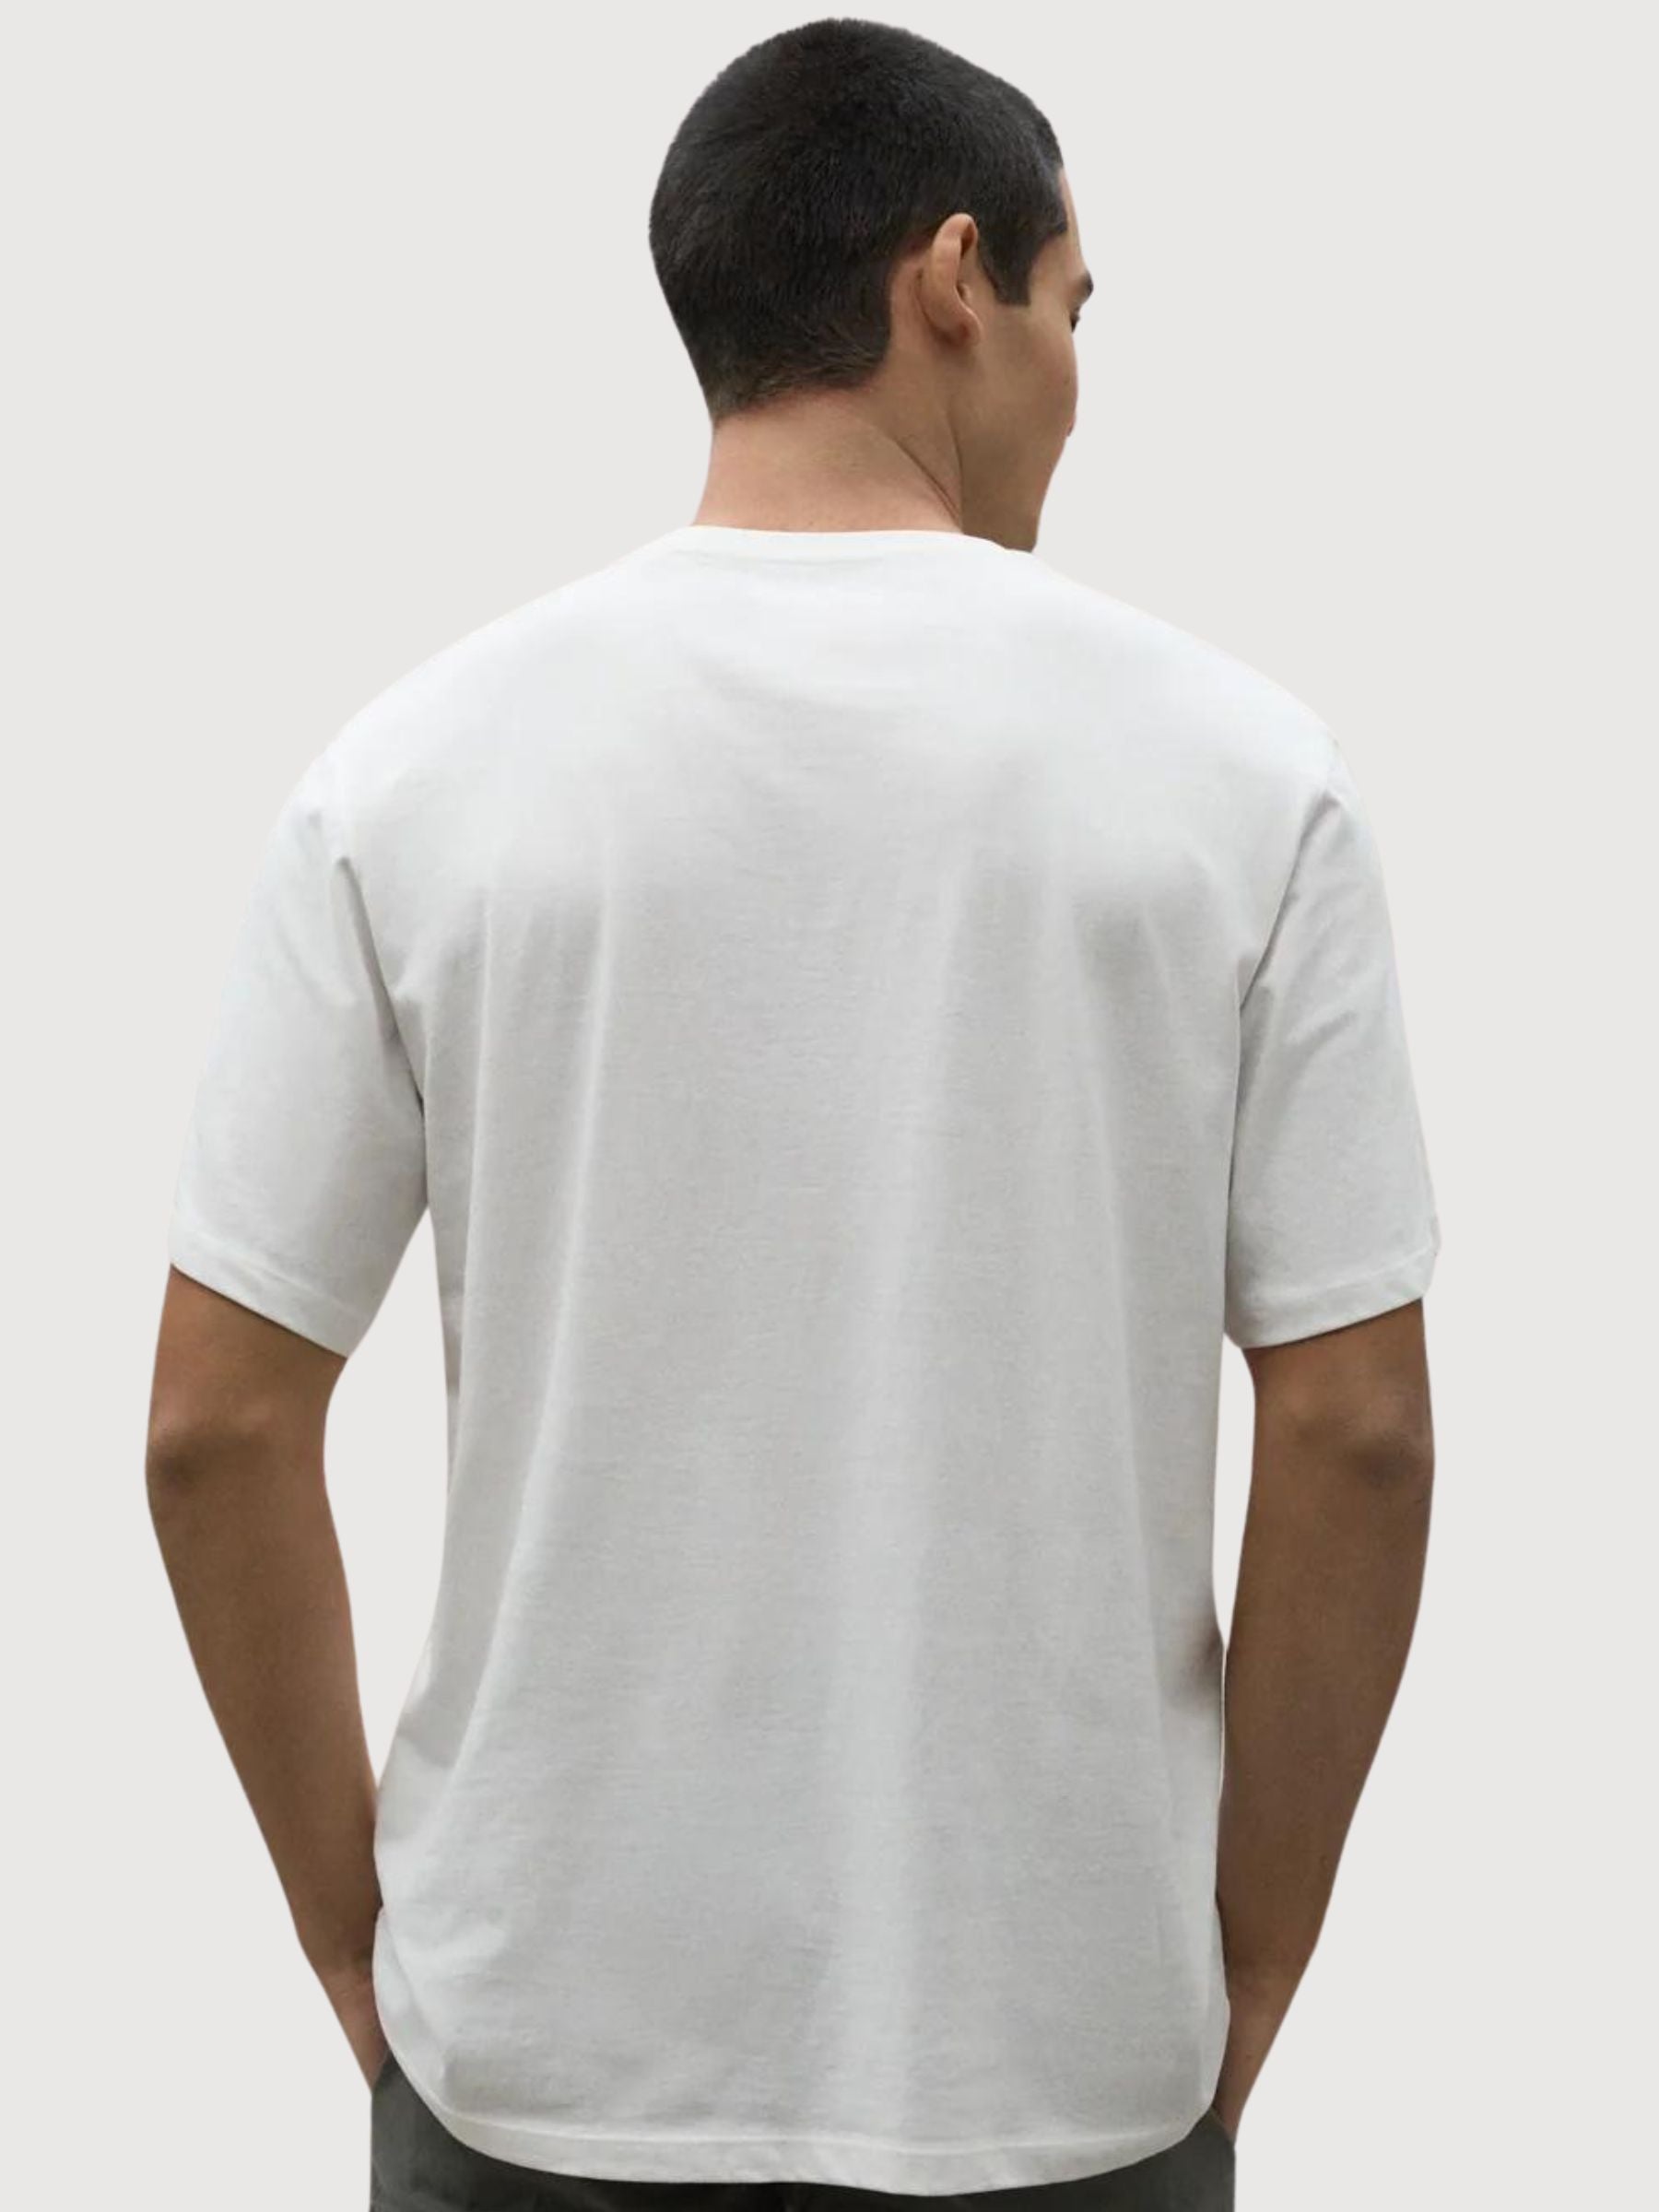 T-Shirt Samoa White in Recycled Cotton | Ecoalf